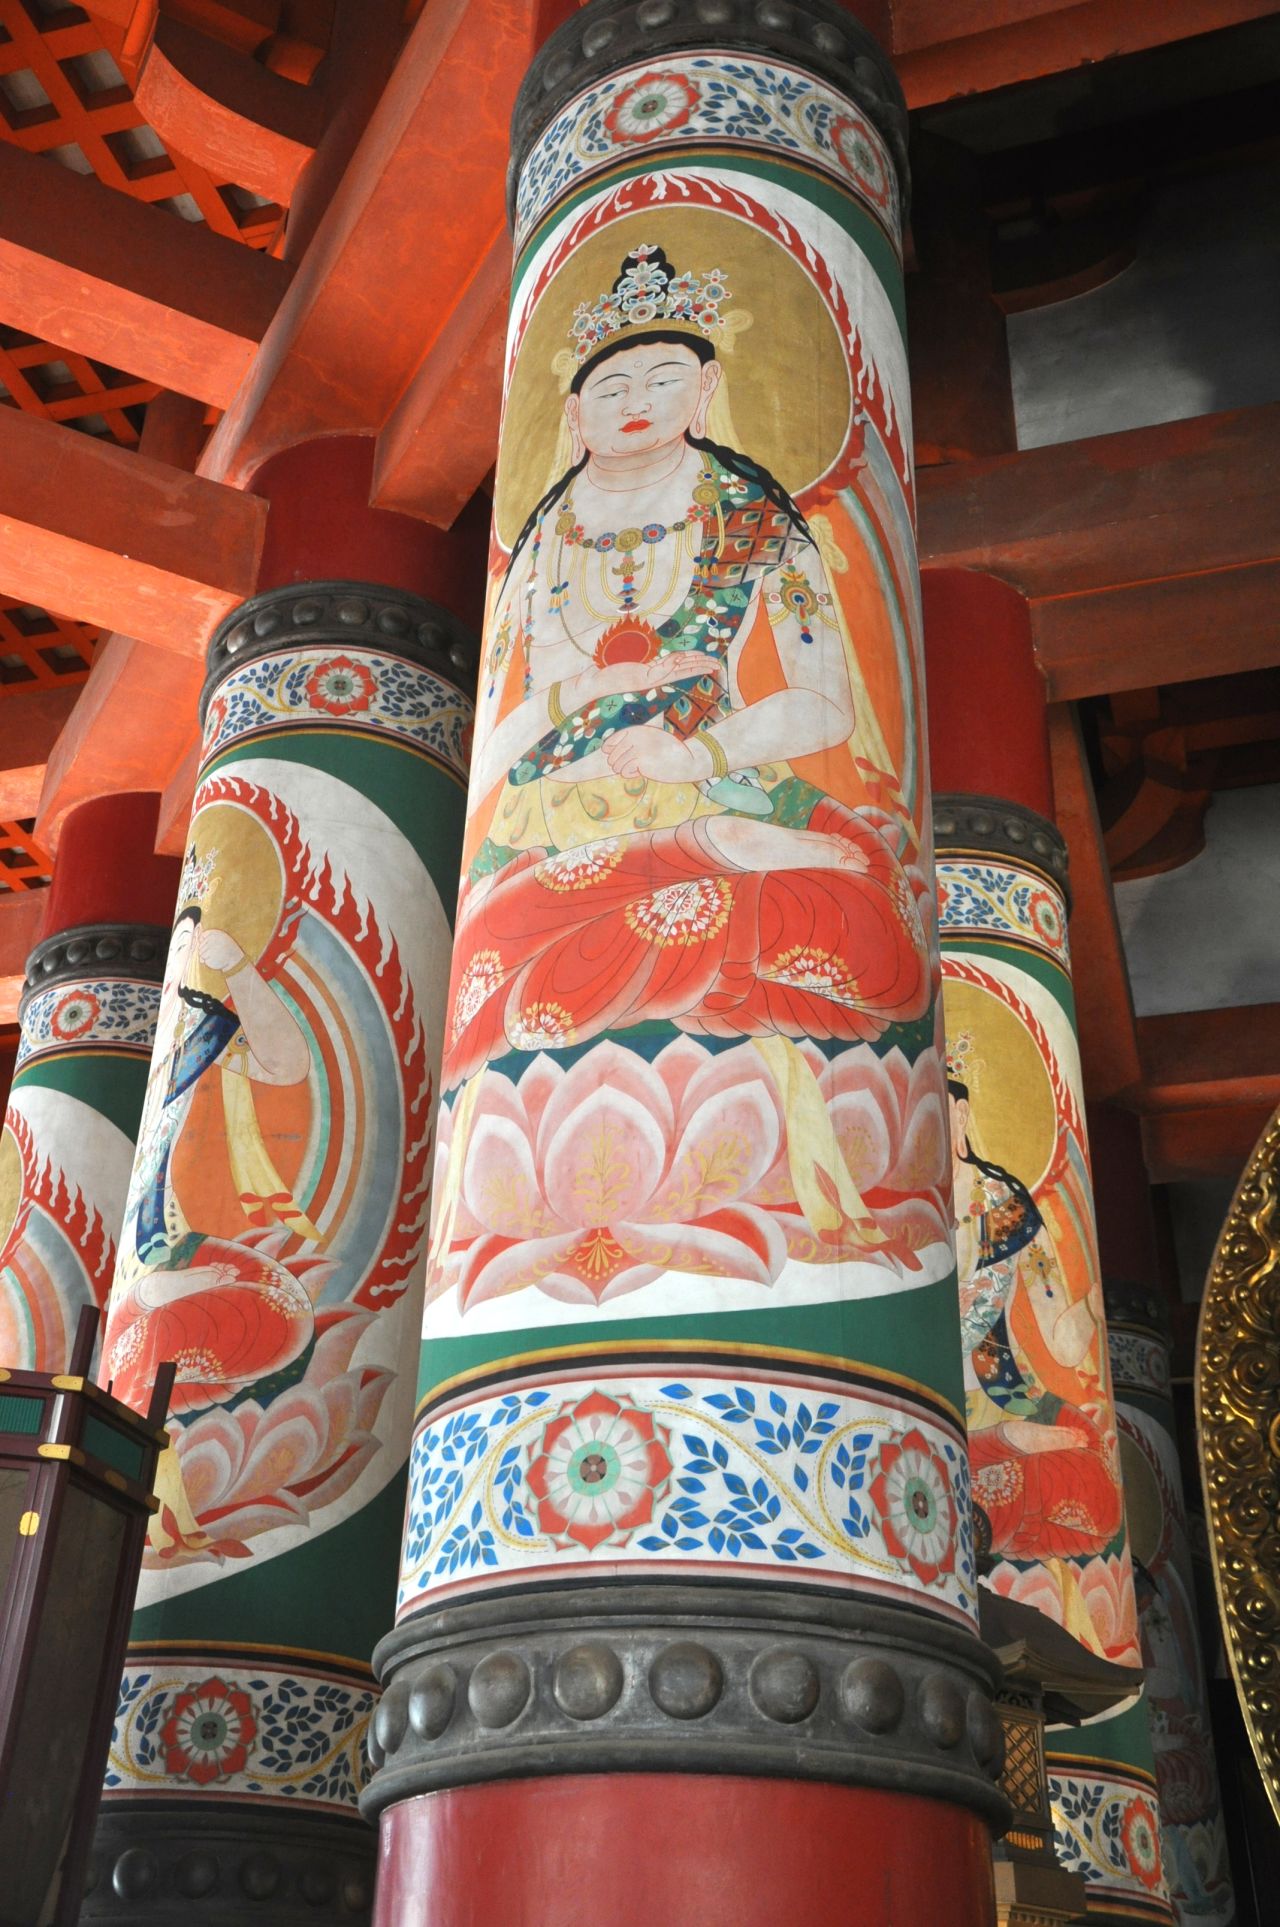 Inside the sacred Daito stupa at Danjo Garan (one of the two most sacred sites in Koyasan), Bodhisattvas (Bosatsu), are painted on each pillar.